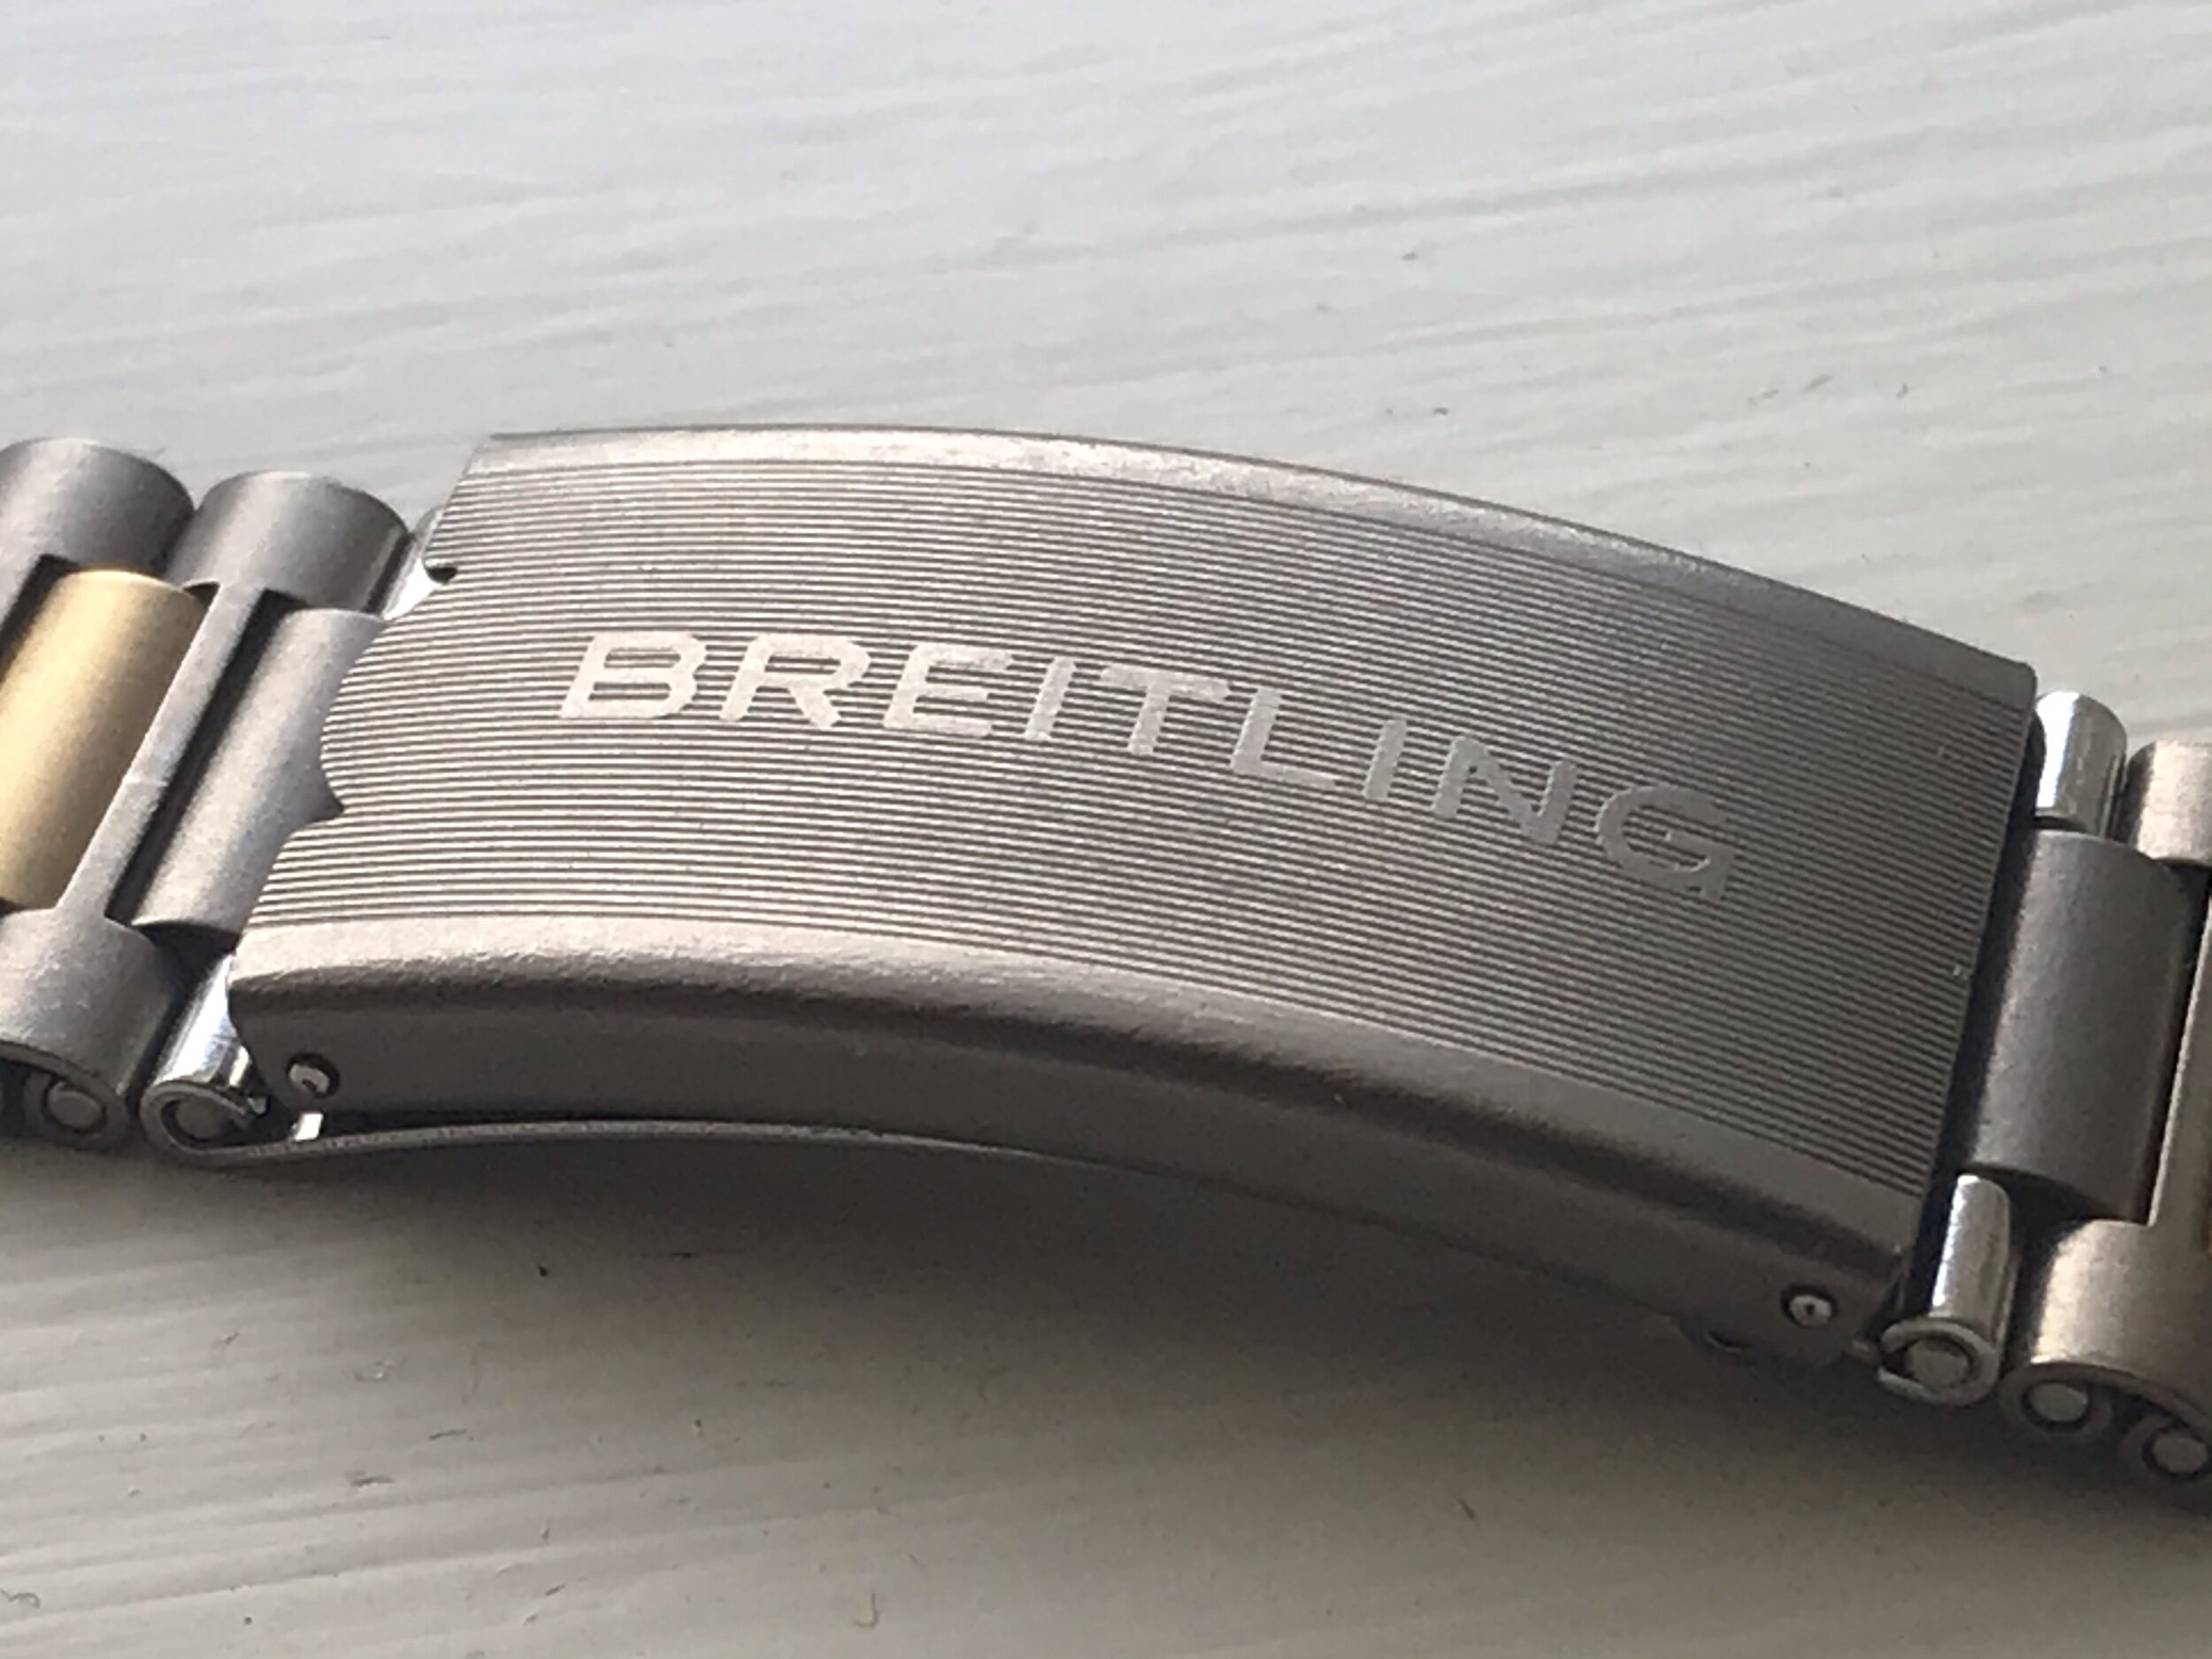 Sold at Auction: Watch : A Breitling Aerospace Gentleman's wristwatch. Ref  F56062, the titanium bracelet wristwatch w